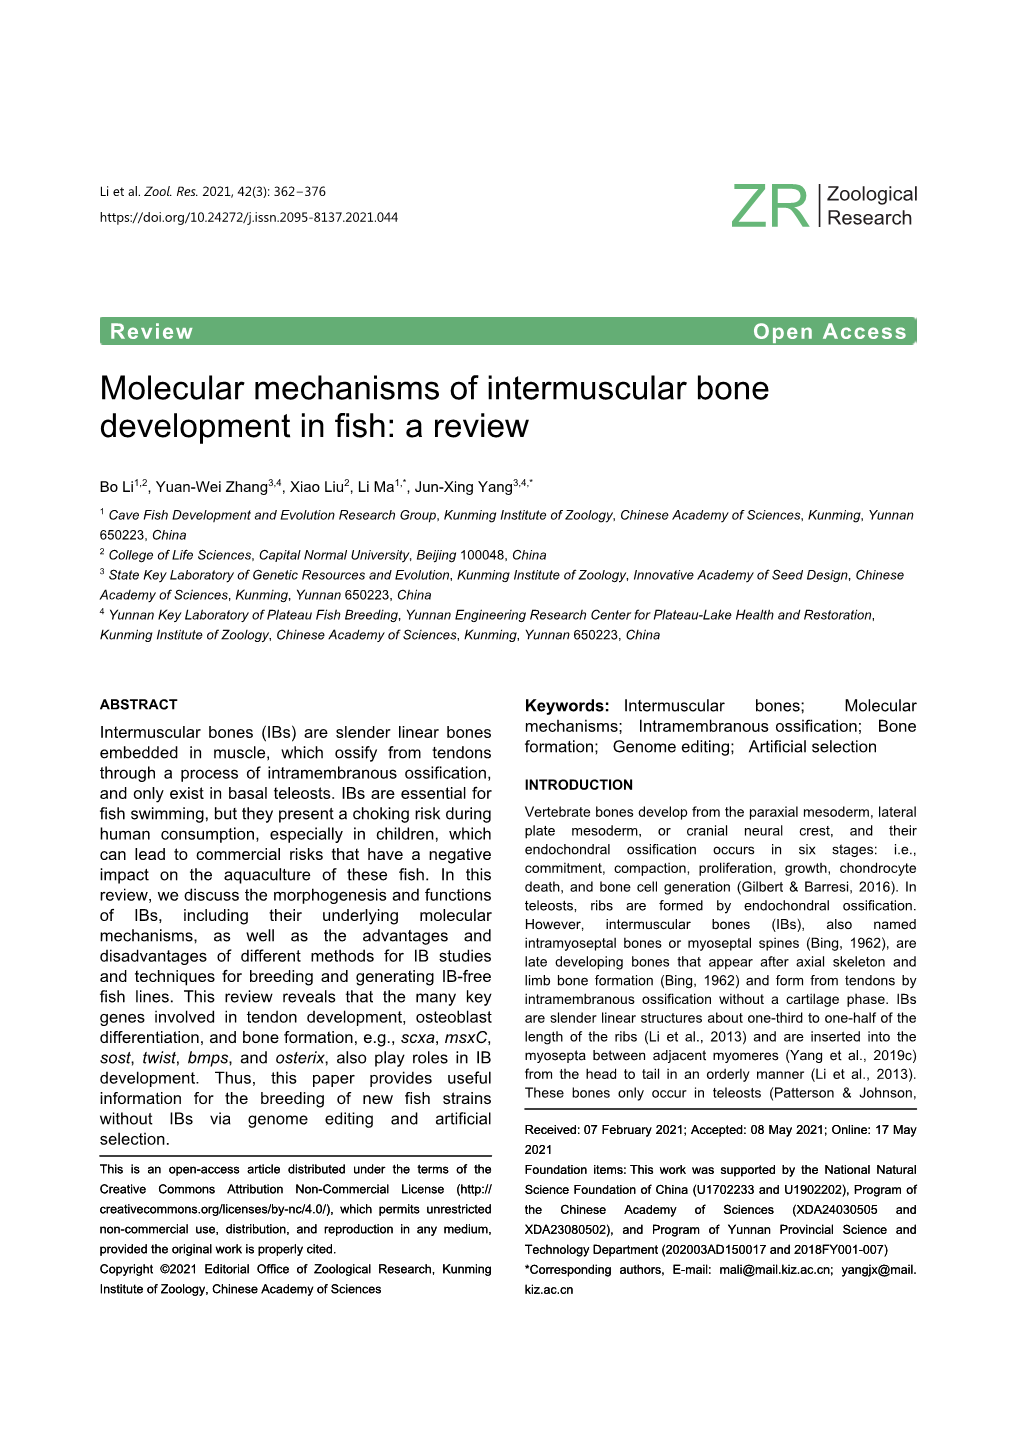 Molecular Mechanisms of Intermuscular Bone Development in Fish: a Review